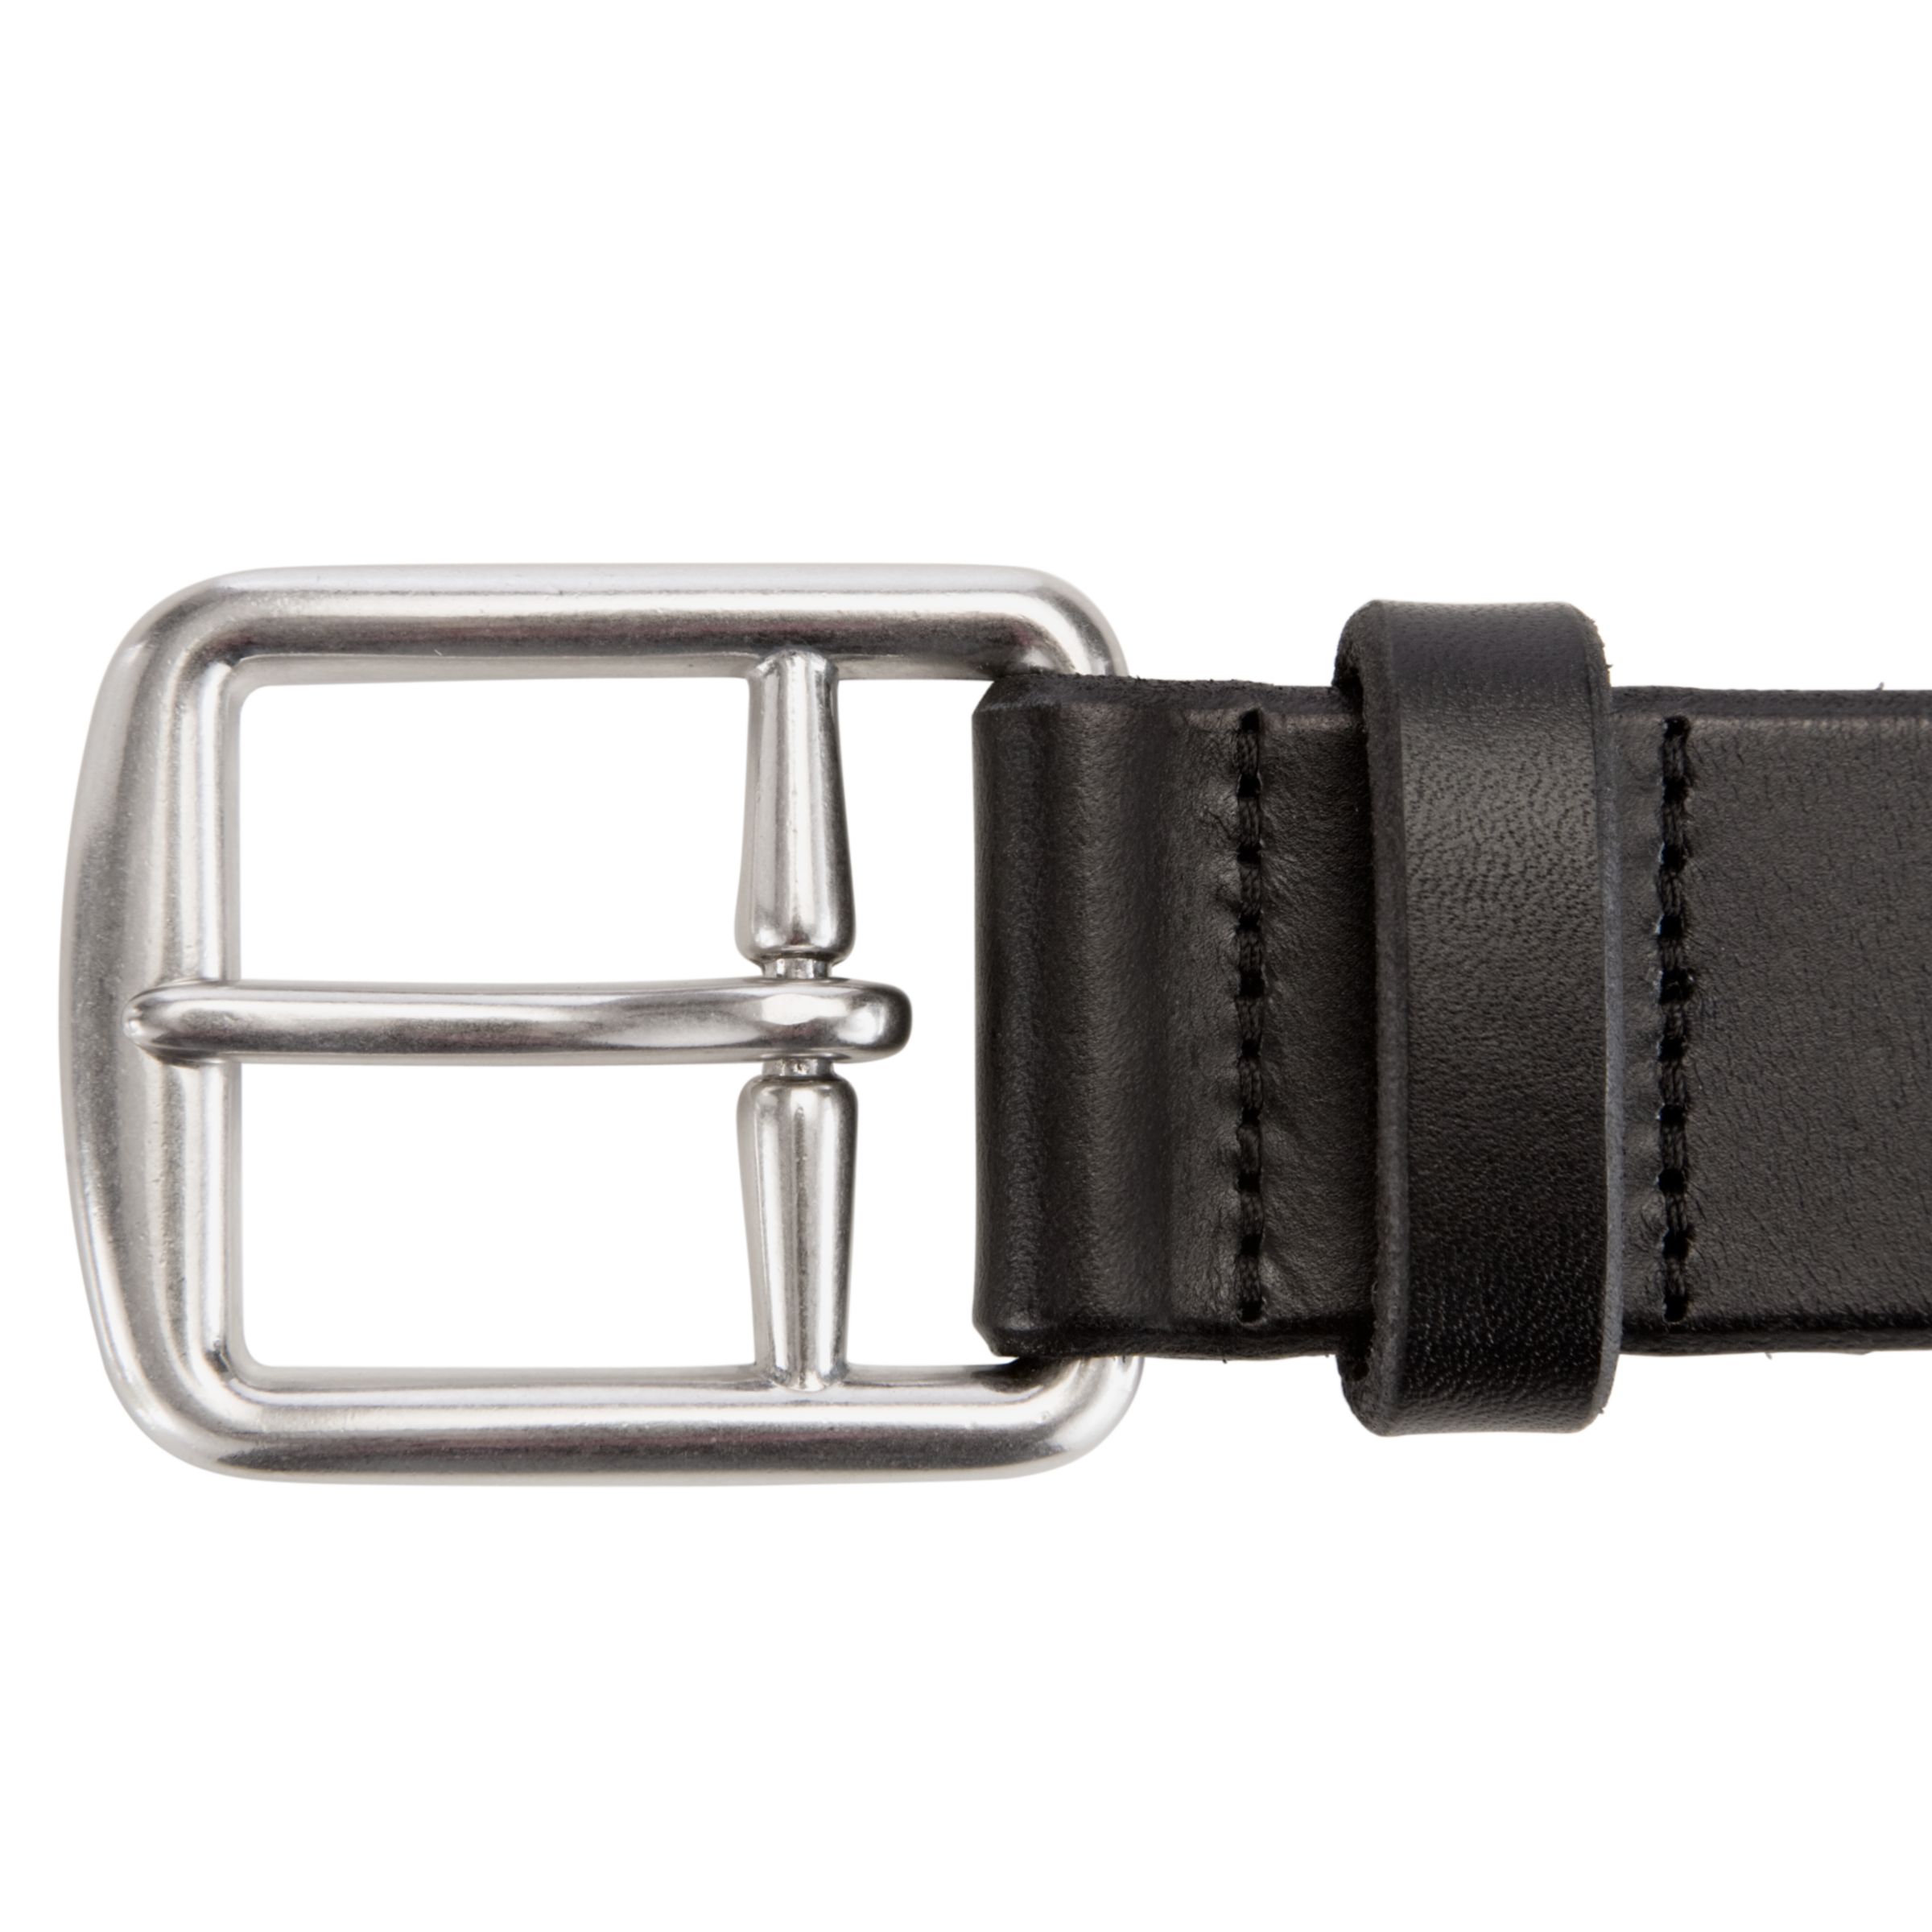 Polo Ralph Lauren Leather Belt, Black at John Lewis & Partners